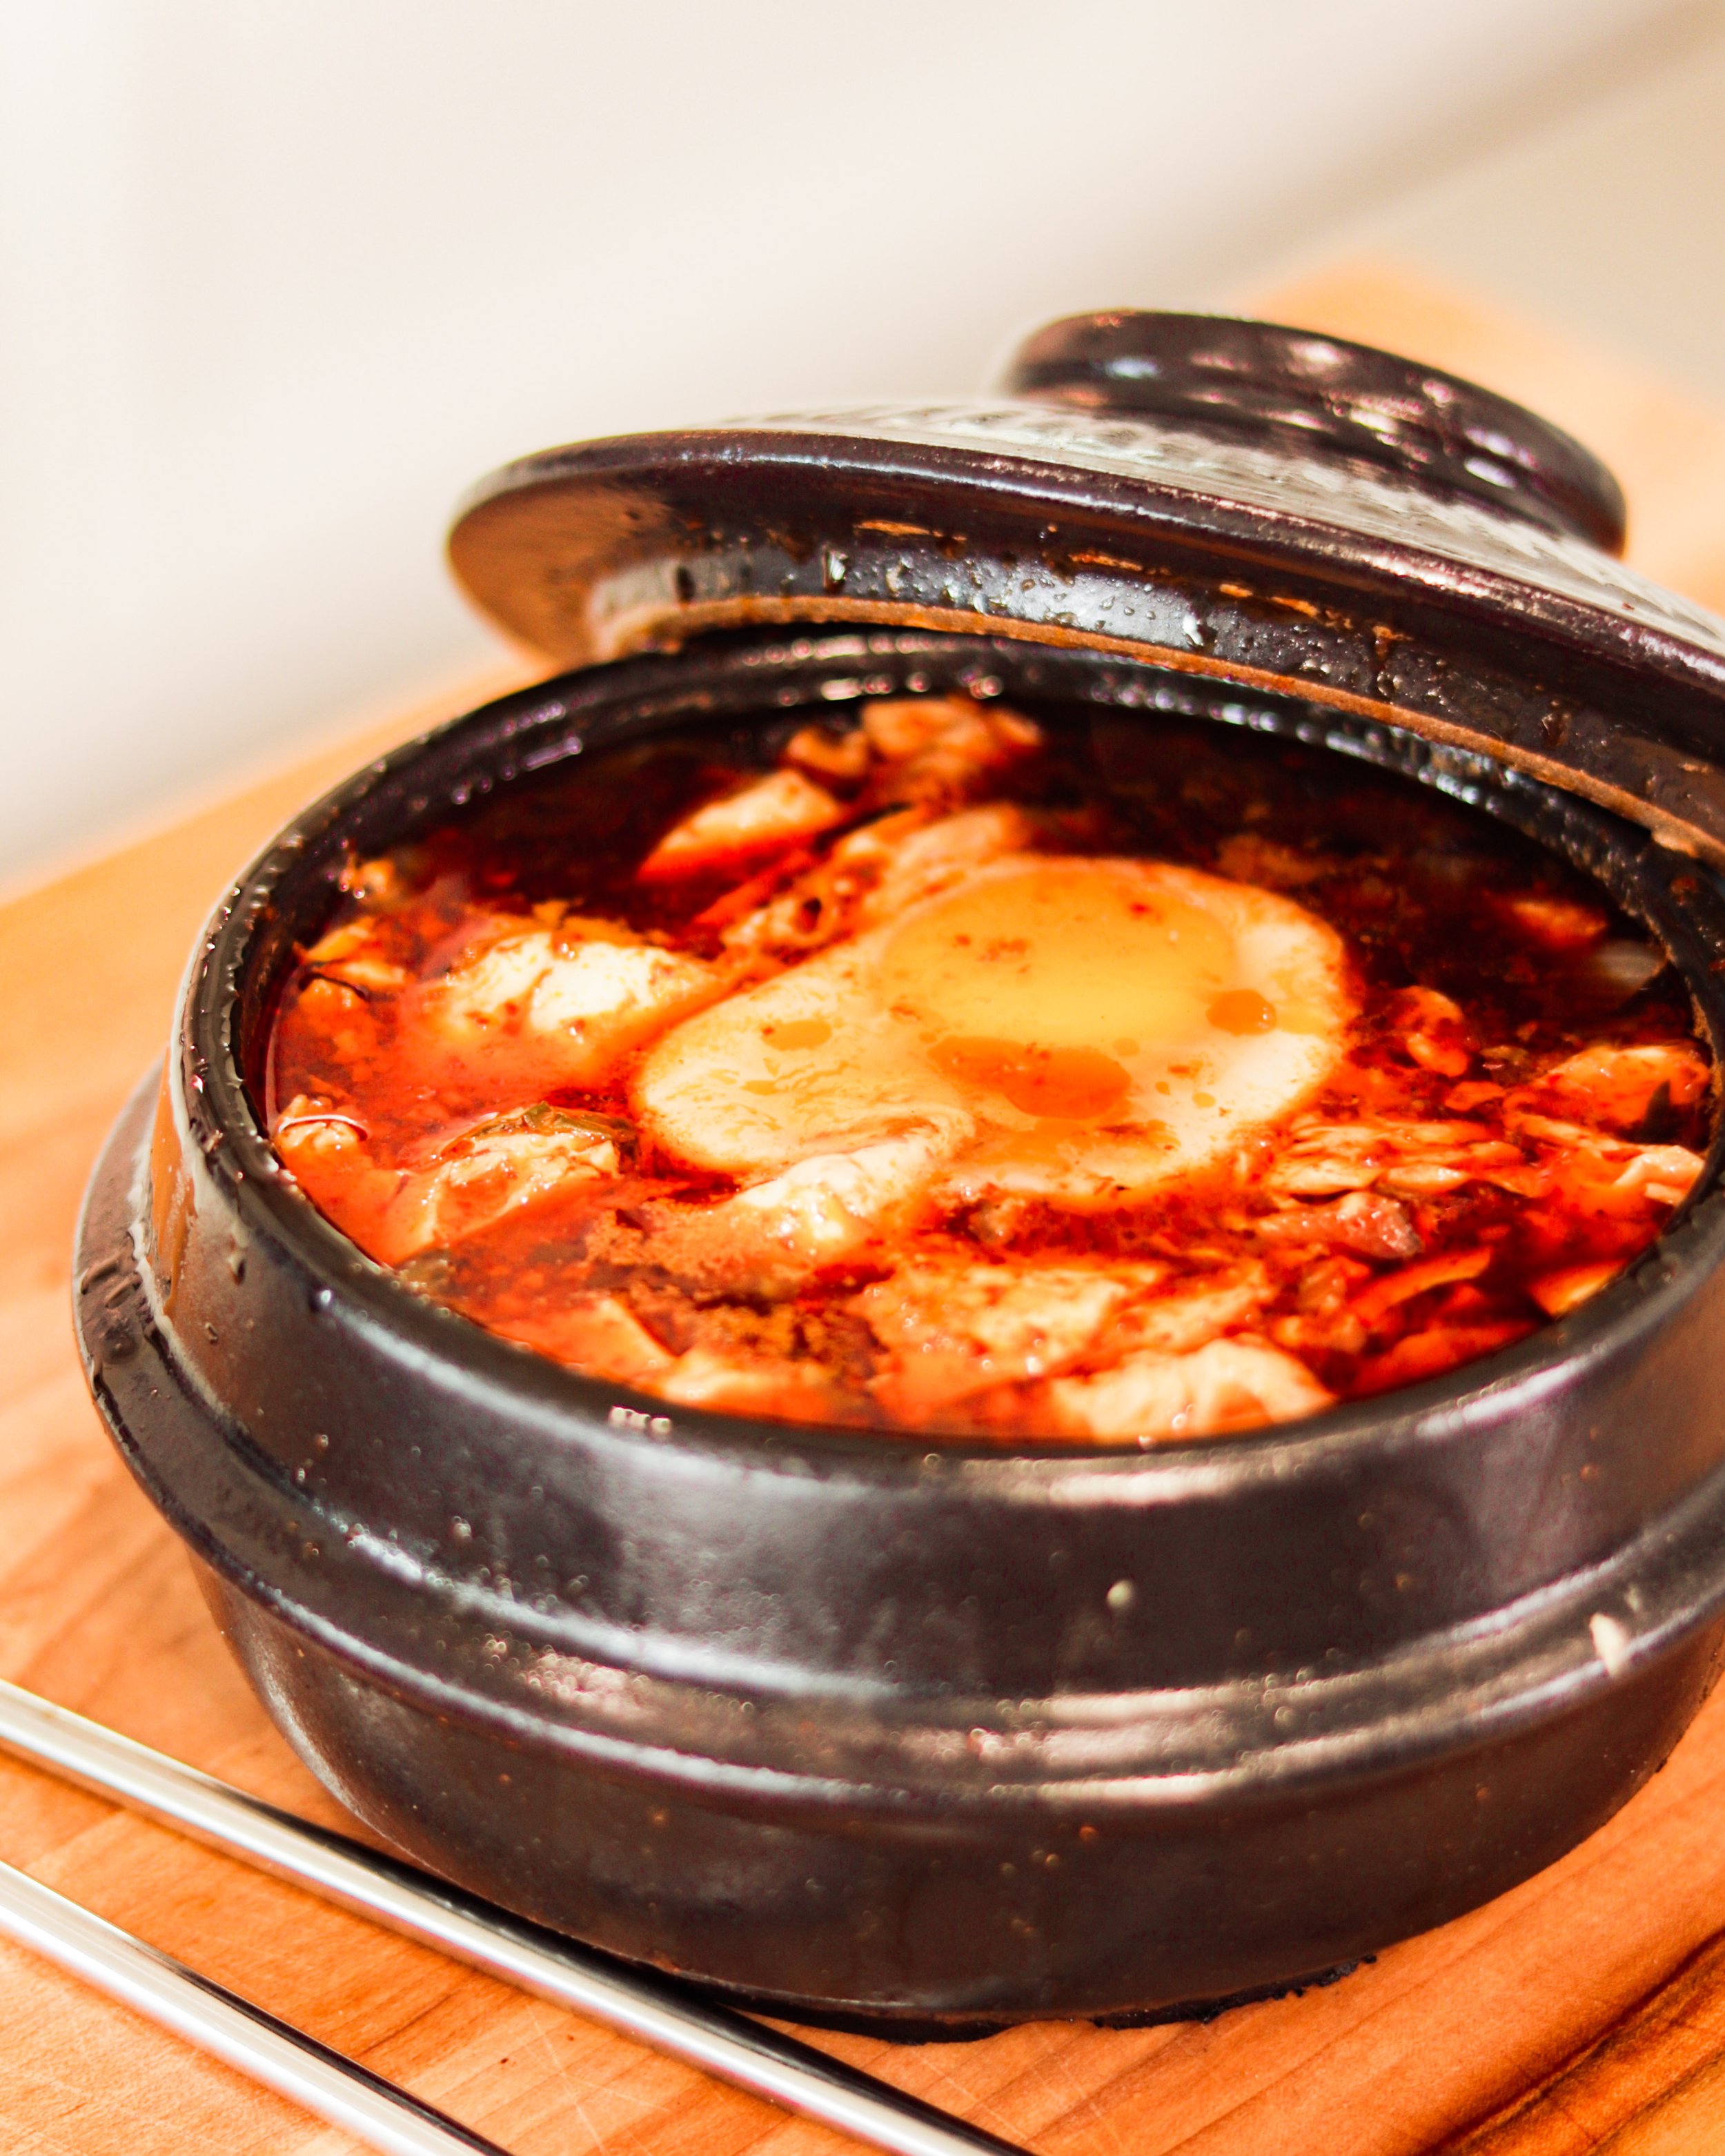 Korea Cooking Pots 